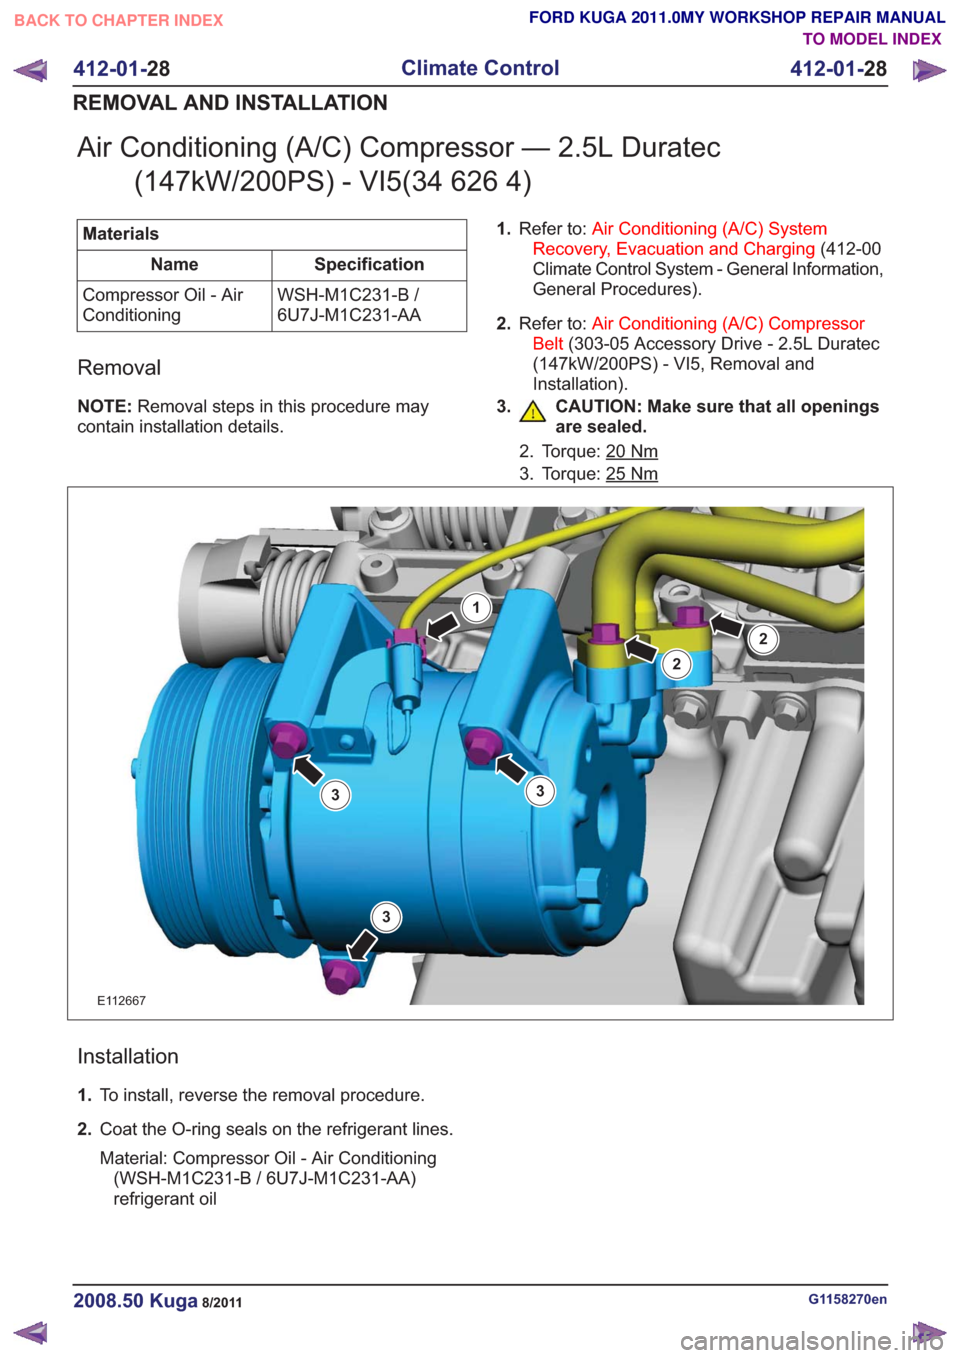 FORD KUGA 2011 1.G Manual Online Air Conditioning (A/C) Compressor — 2.5L Duratec(147kW/200PS) - VI5(34 626 4)
Materials
Specification
Name
WSH-M1C231-B /
6U7J-M1C231-AA
Compressor Oil - Air
Conditioning
Removal
NOTE:
Removal steps